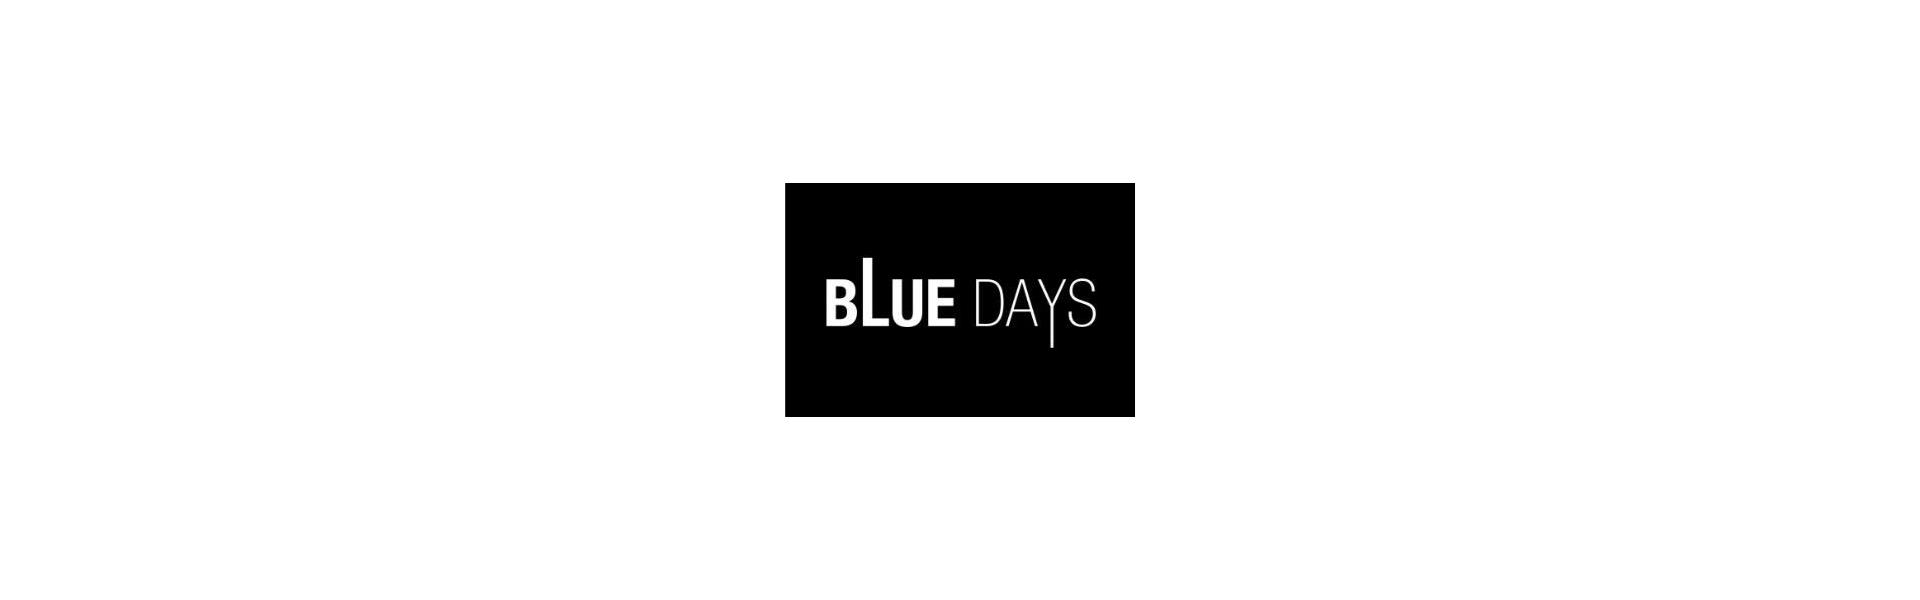 bluedays-logo